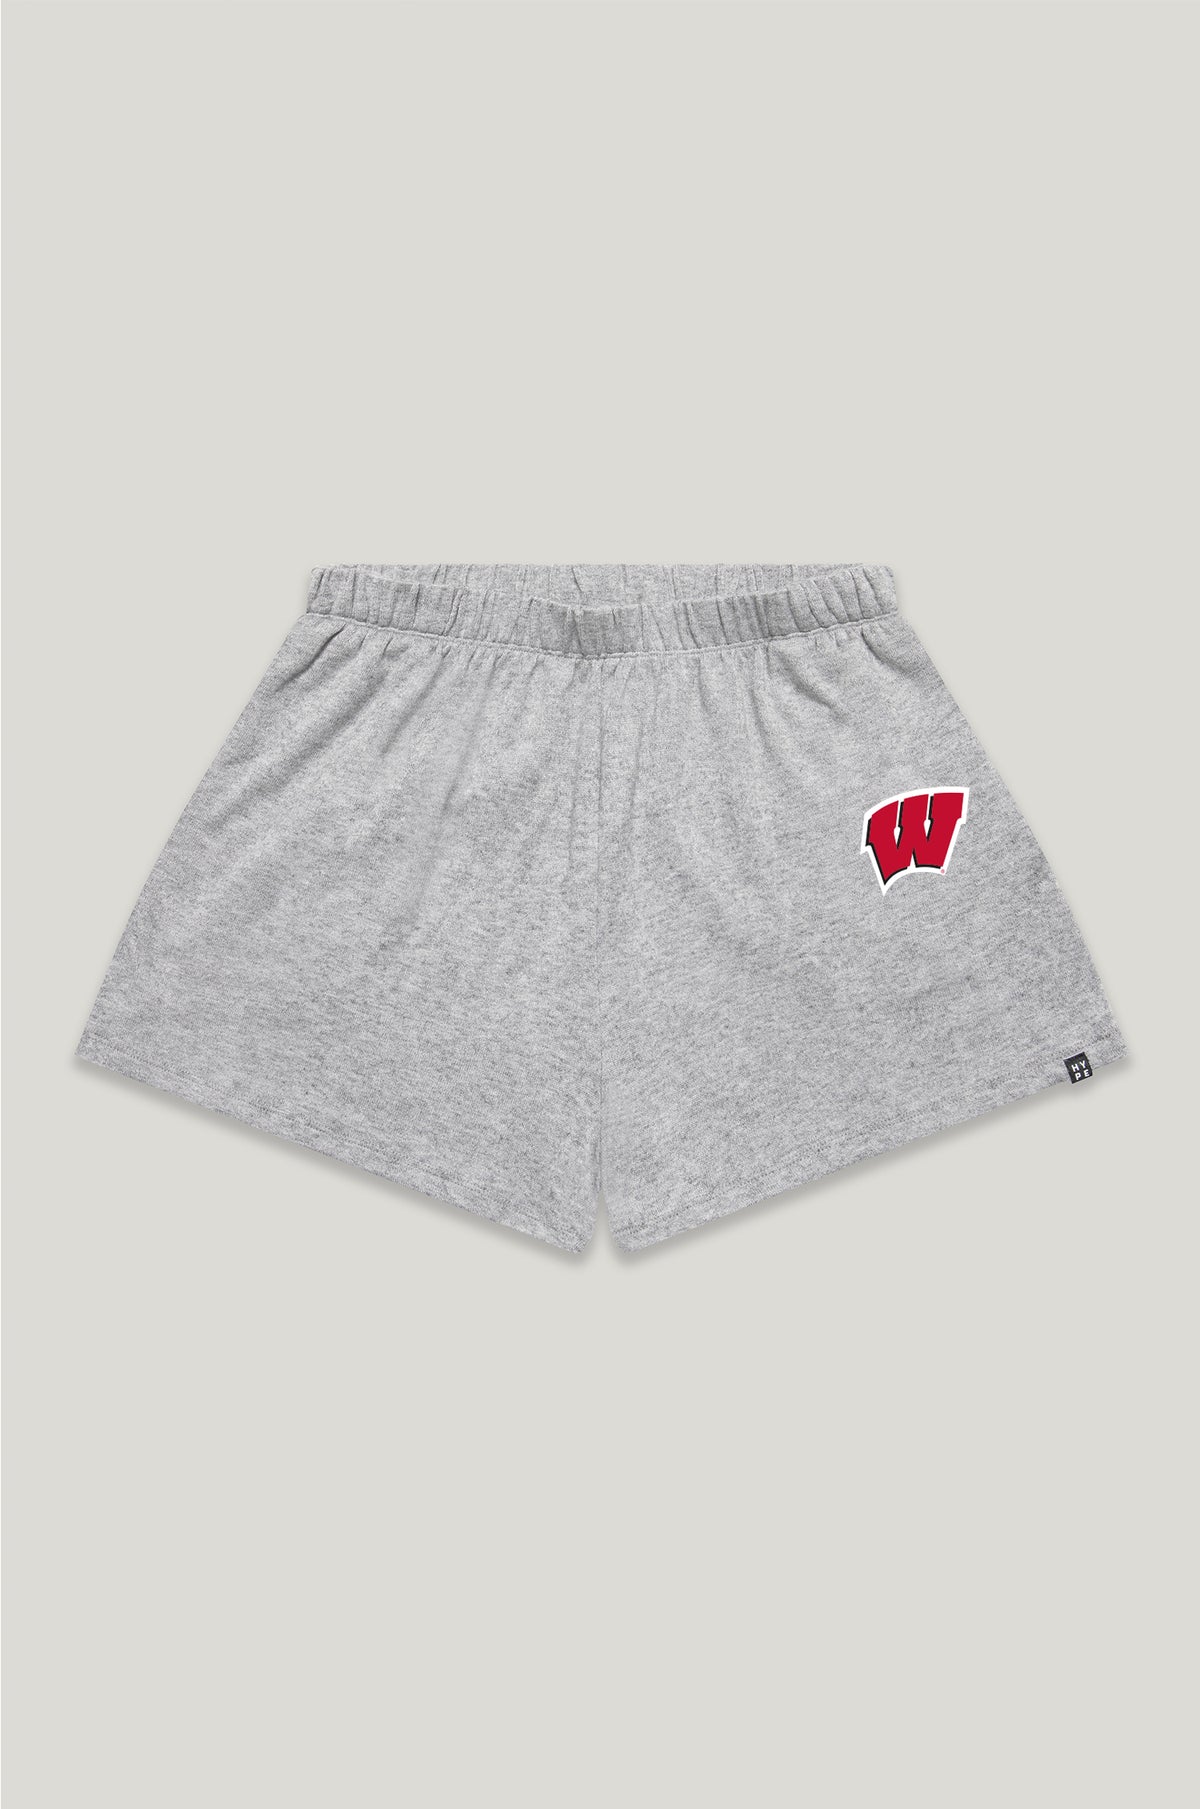 Wisconsin Ace Shorts